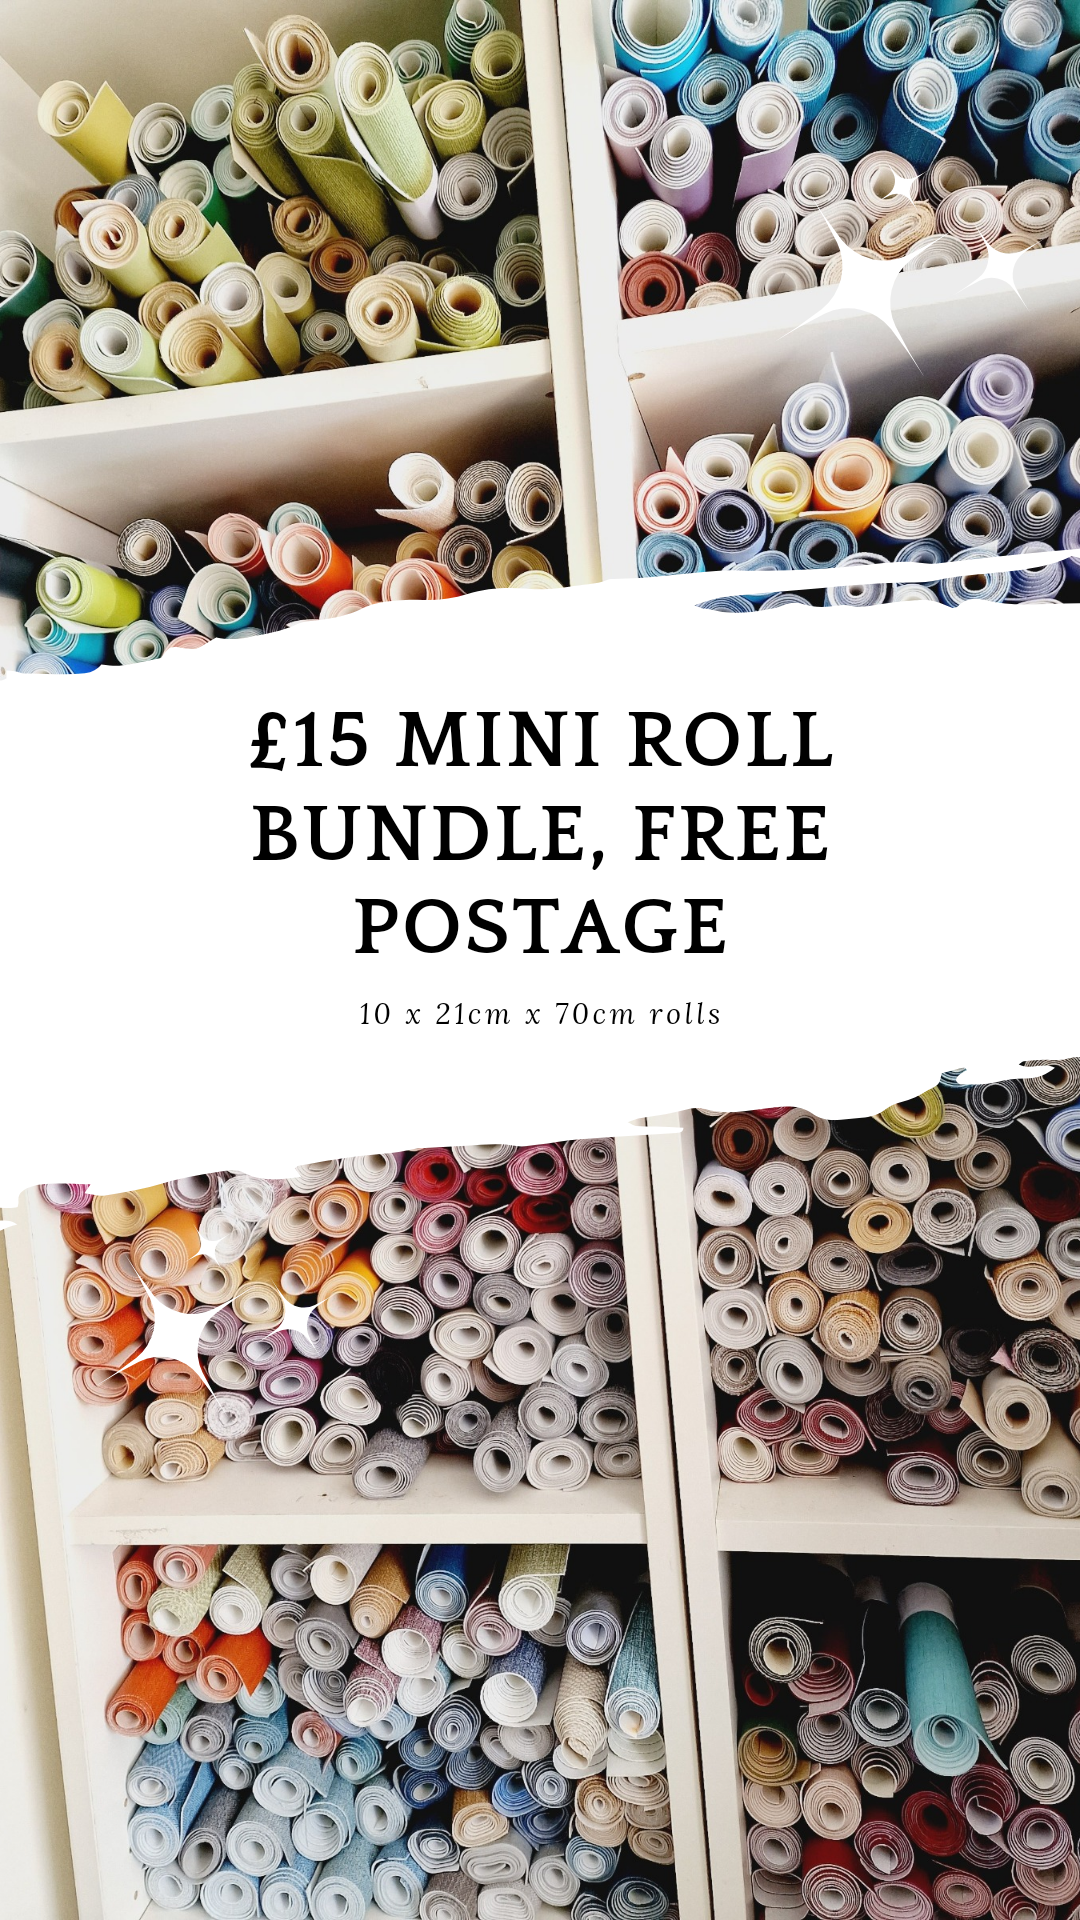 £15 Mini Roll Bundle Faux Leather 21cm x 70cm rolls Free Postage